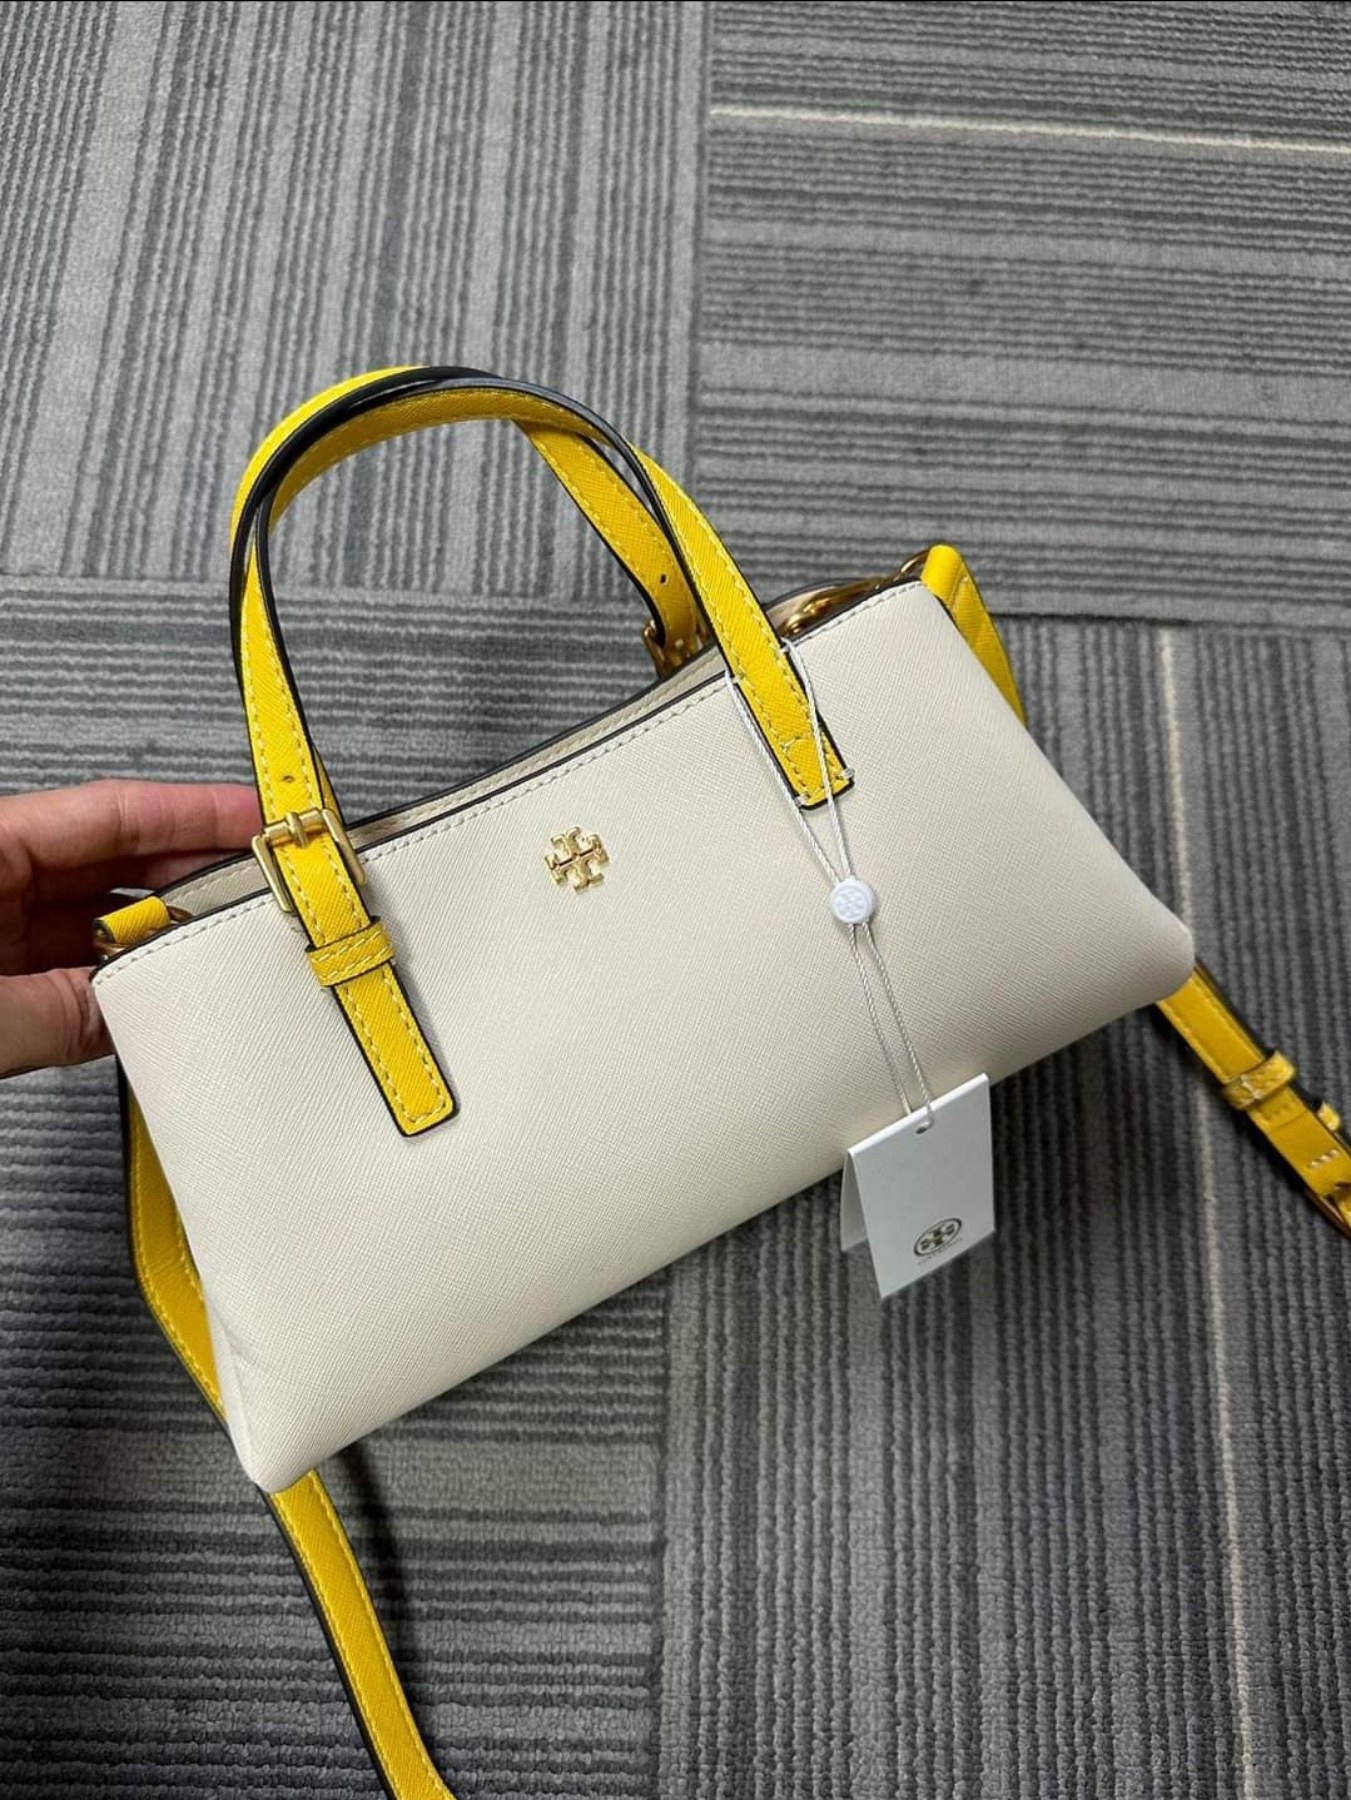 Handbags Tory Burch, Style code: 146011-927